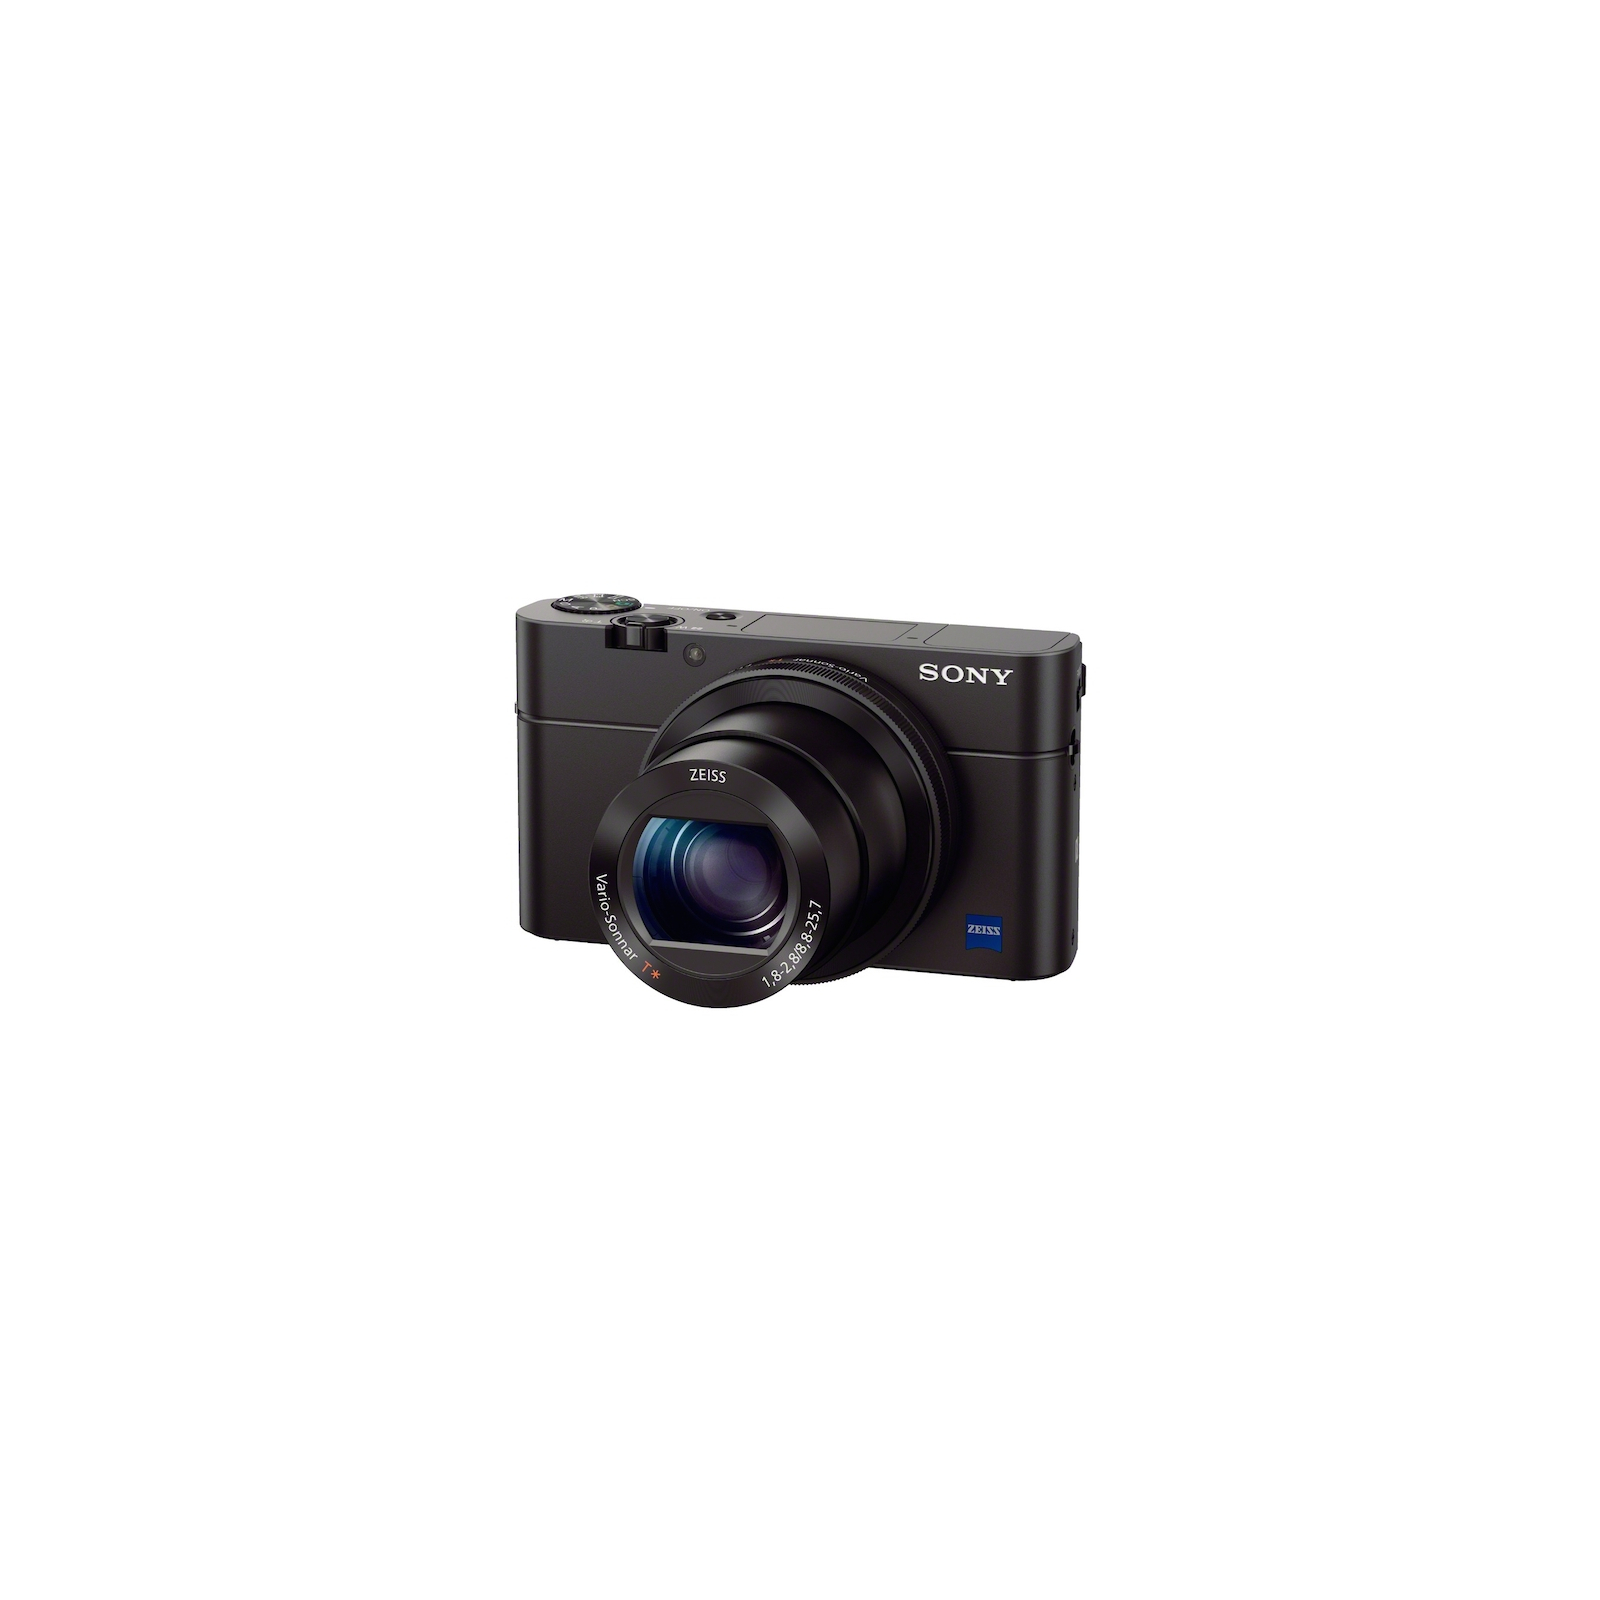 Цифровой фотоаппарат Sony Cyber-shot DSC-RX100 Mark III (DSCRX100M3.RU3)